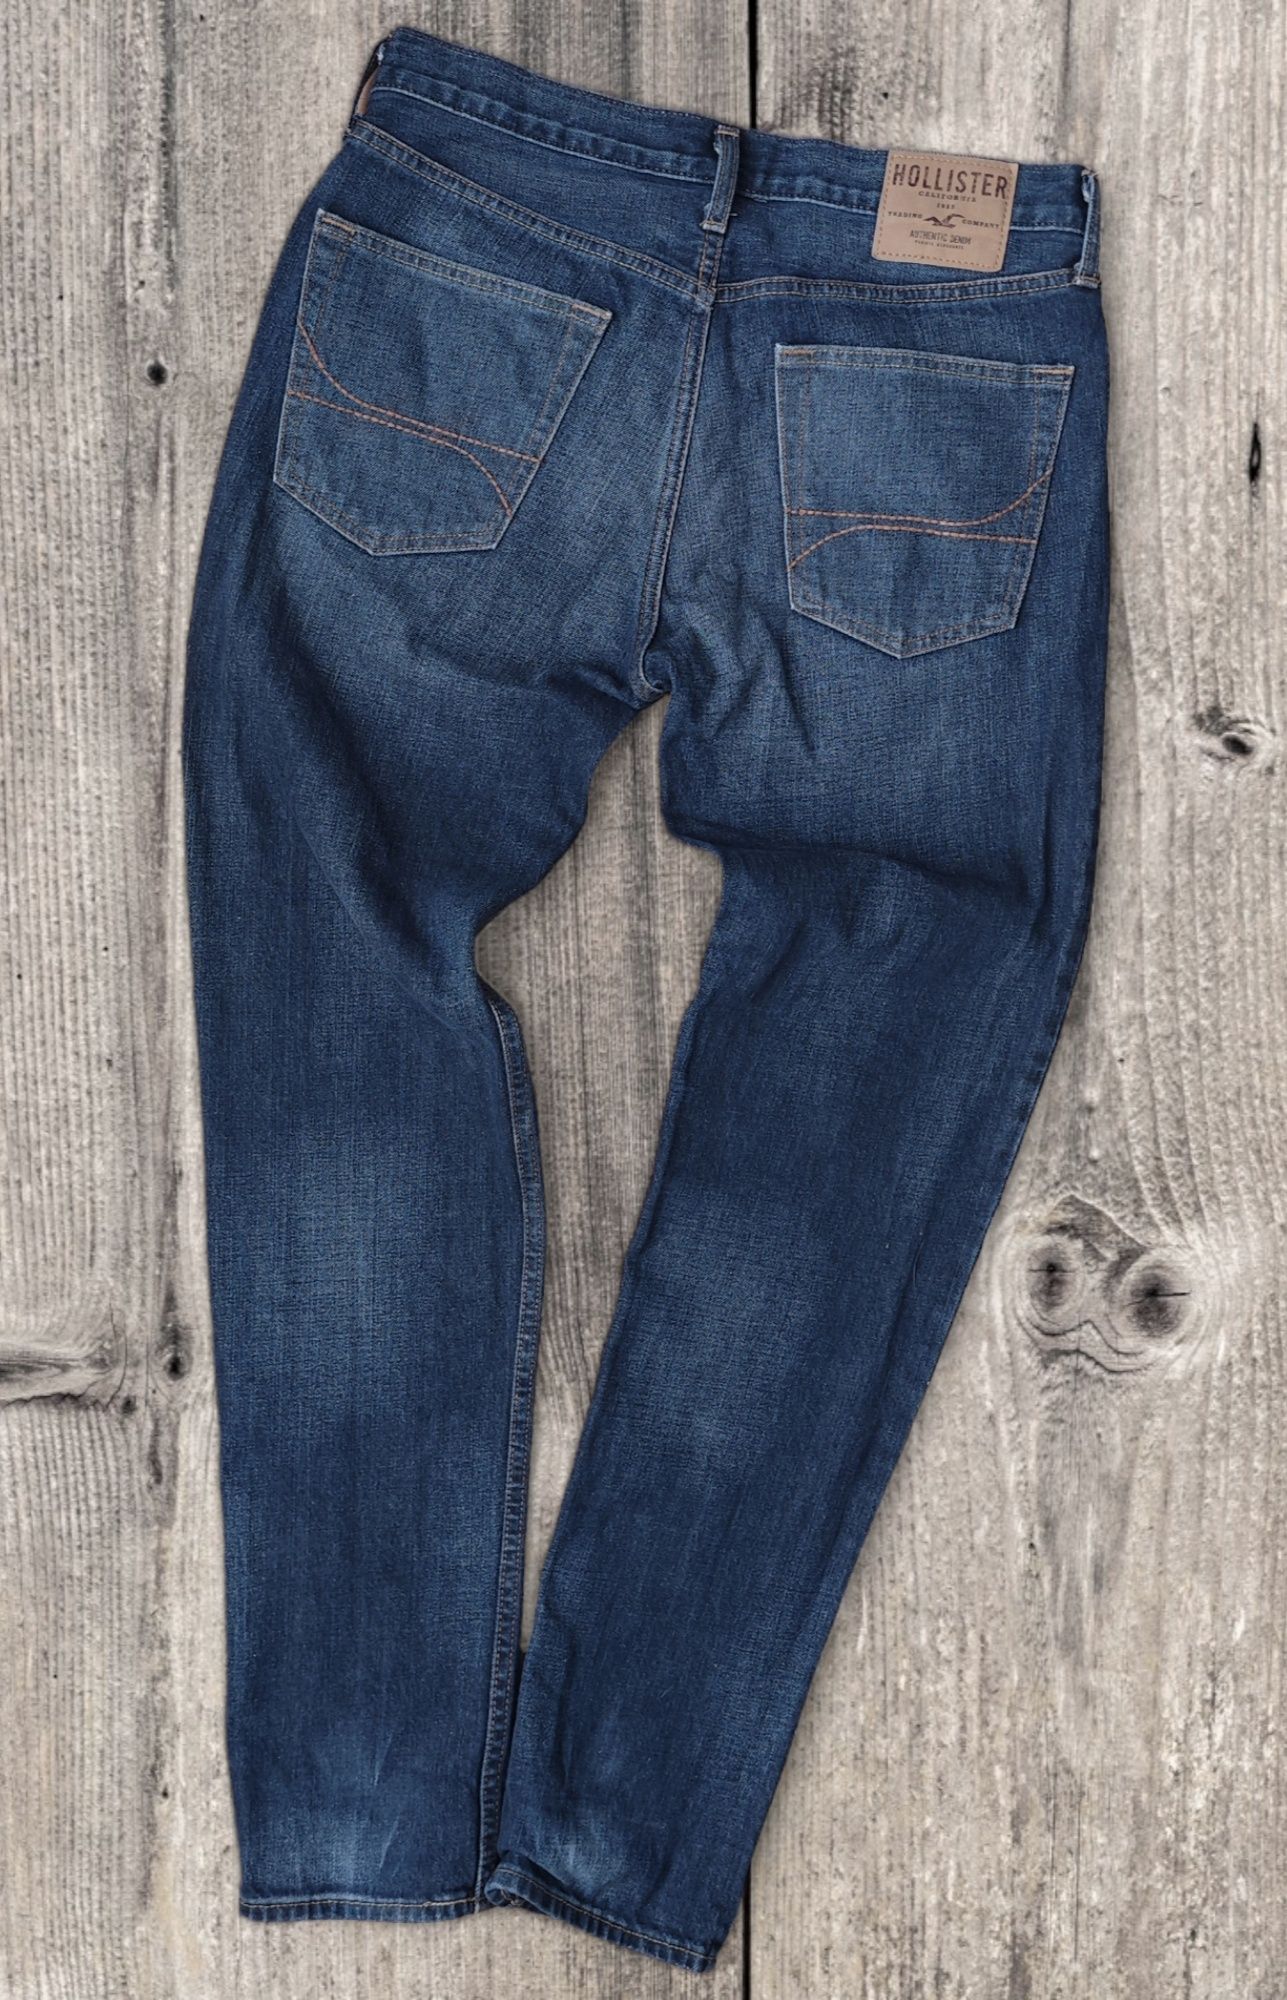 Hollister spodnie jeans rozm.33/32